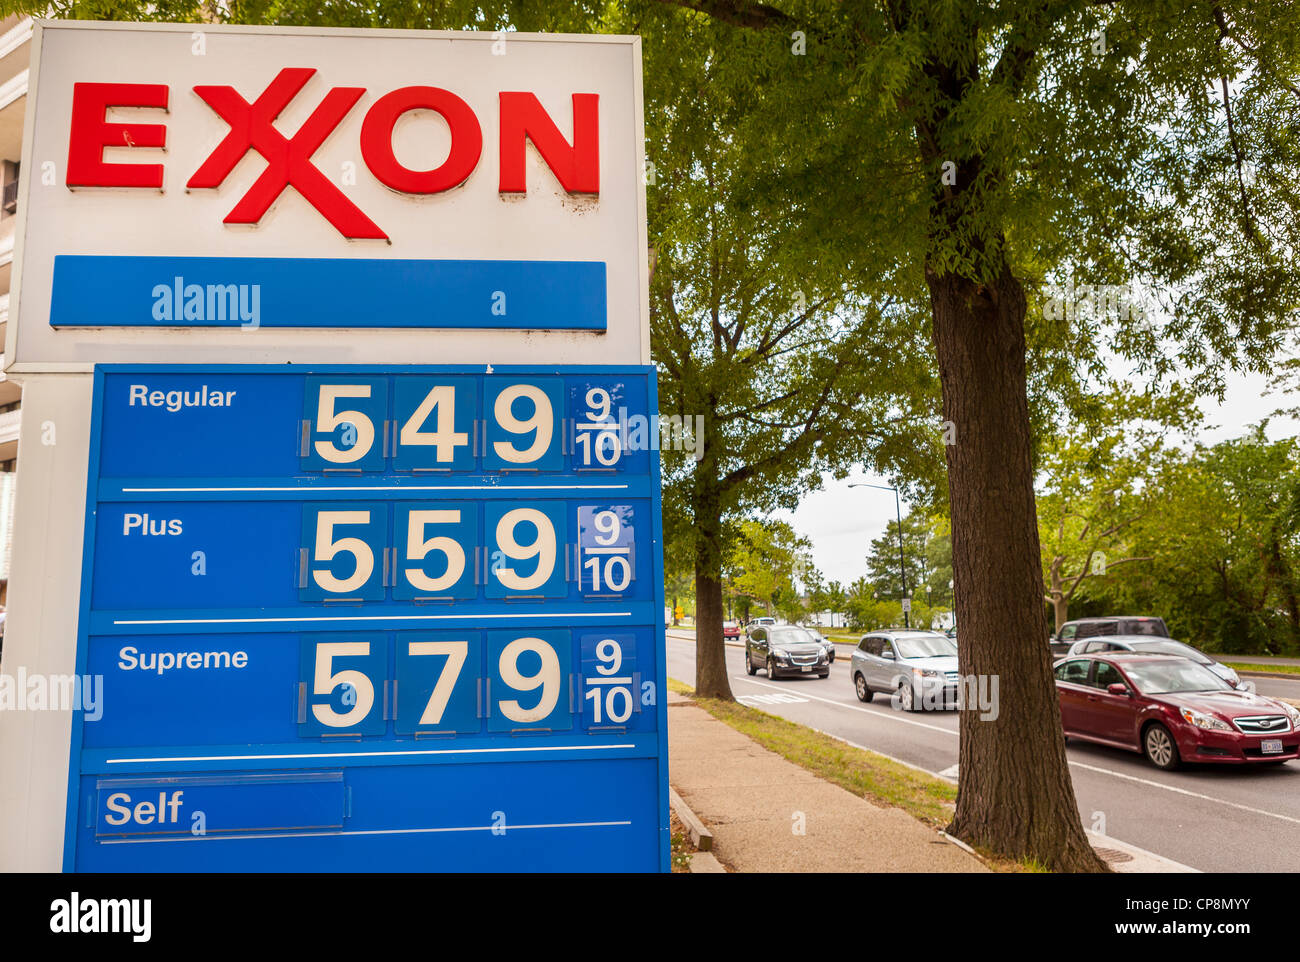 WASHINGTON, DC, USA - $5 gas price sign at Exxon service station on May 7, 2012. Stock Photo